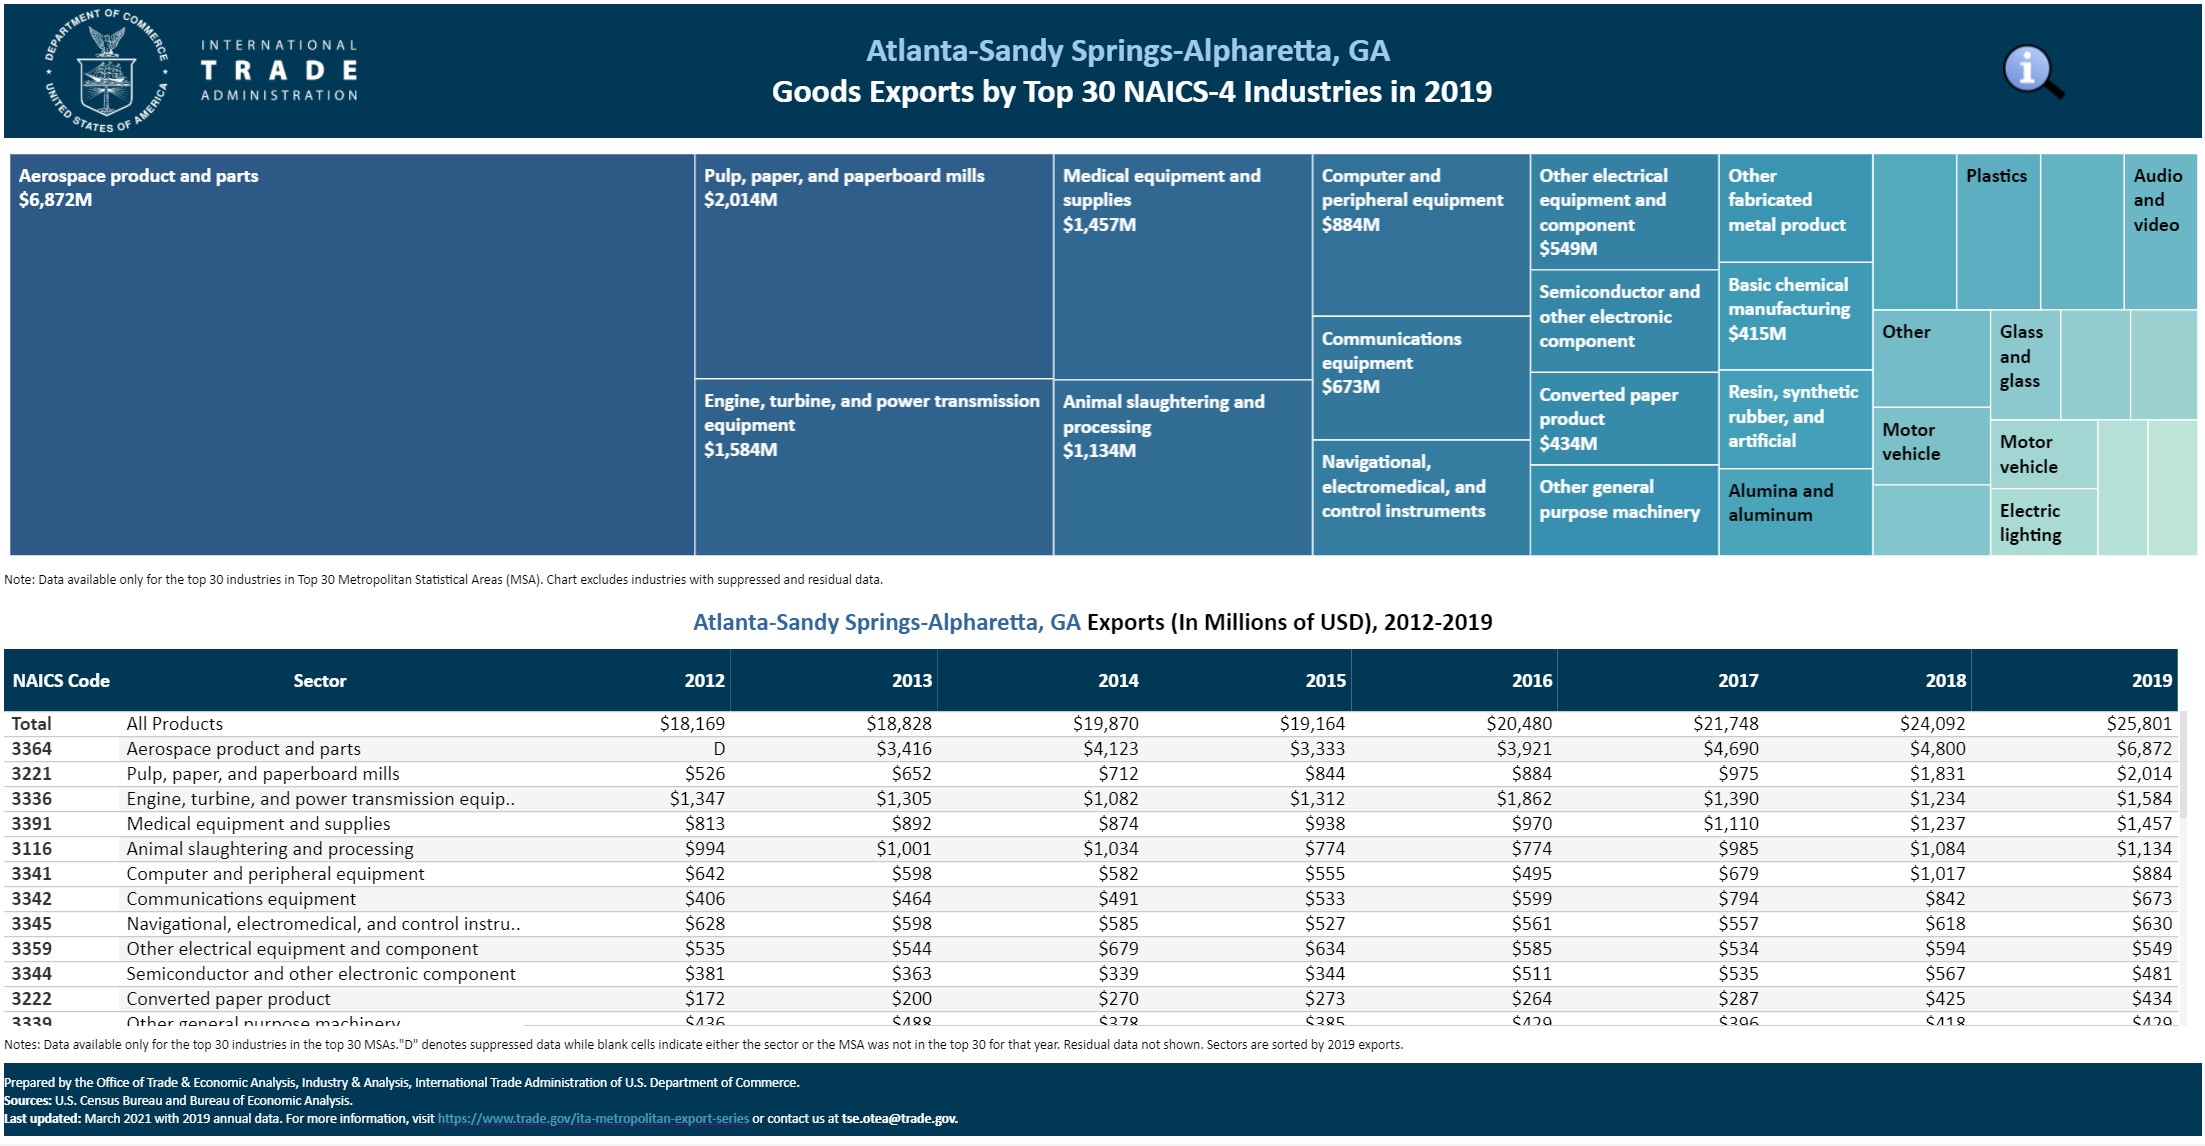 MSA Exports by NAICS-4 Industry